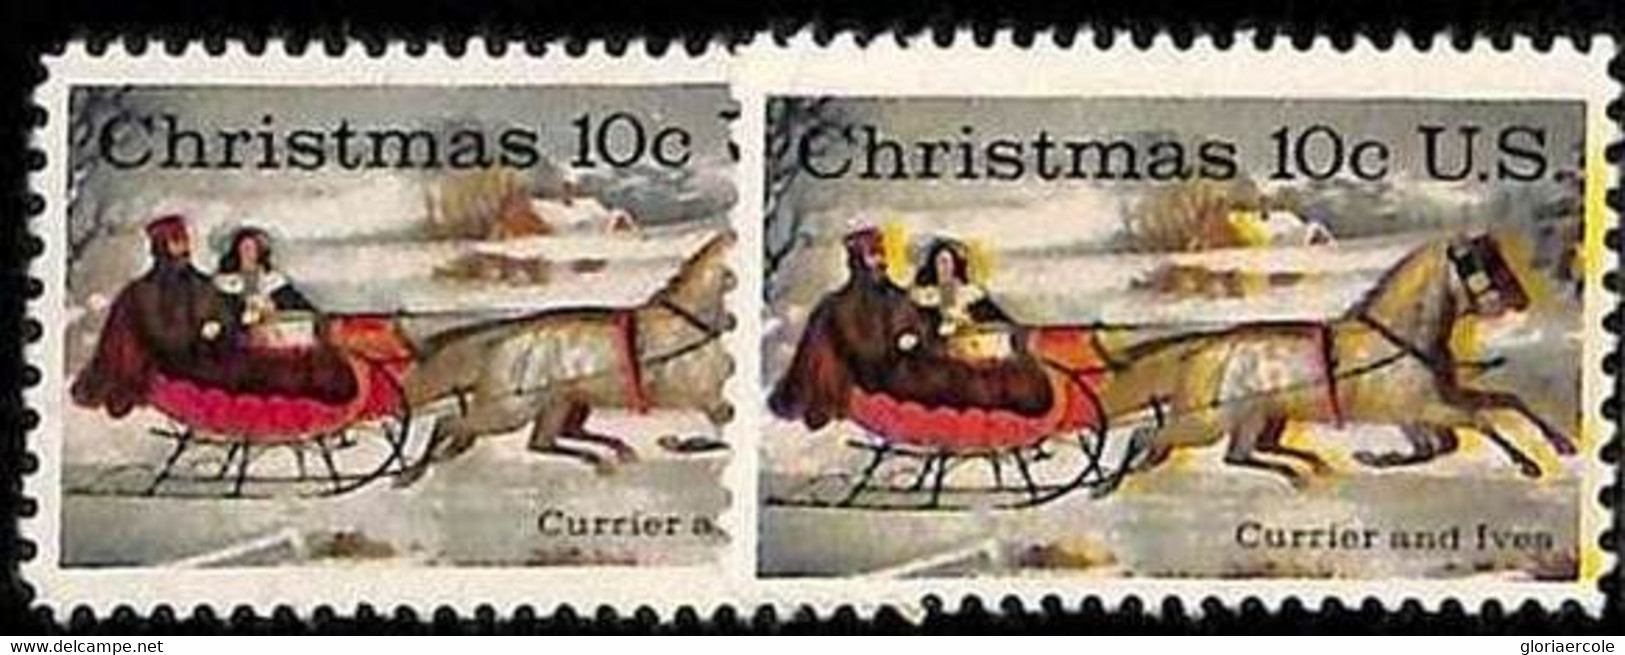 94809c - USA - STAMPS - Sc # 1551 Christmas Horses   SHIFTED Yellow  PRINT - MNH - Errors, Freaks & Oddities (EFOs)